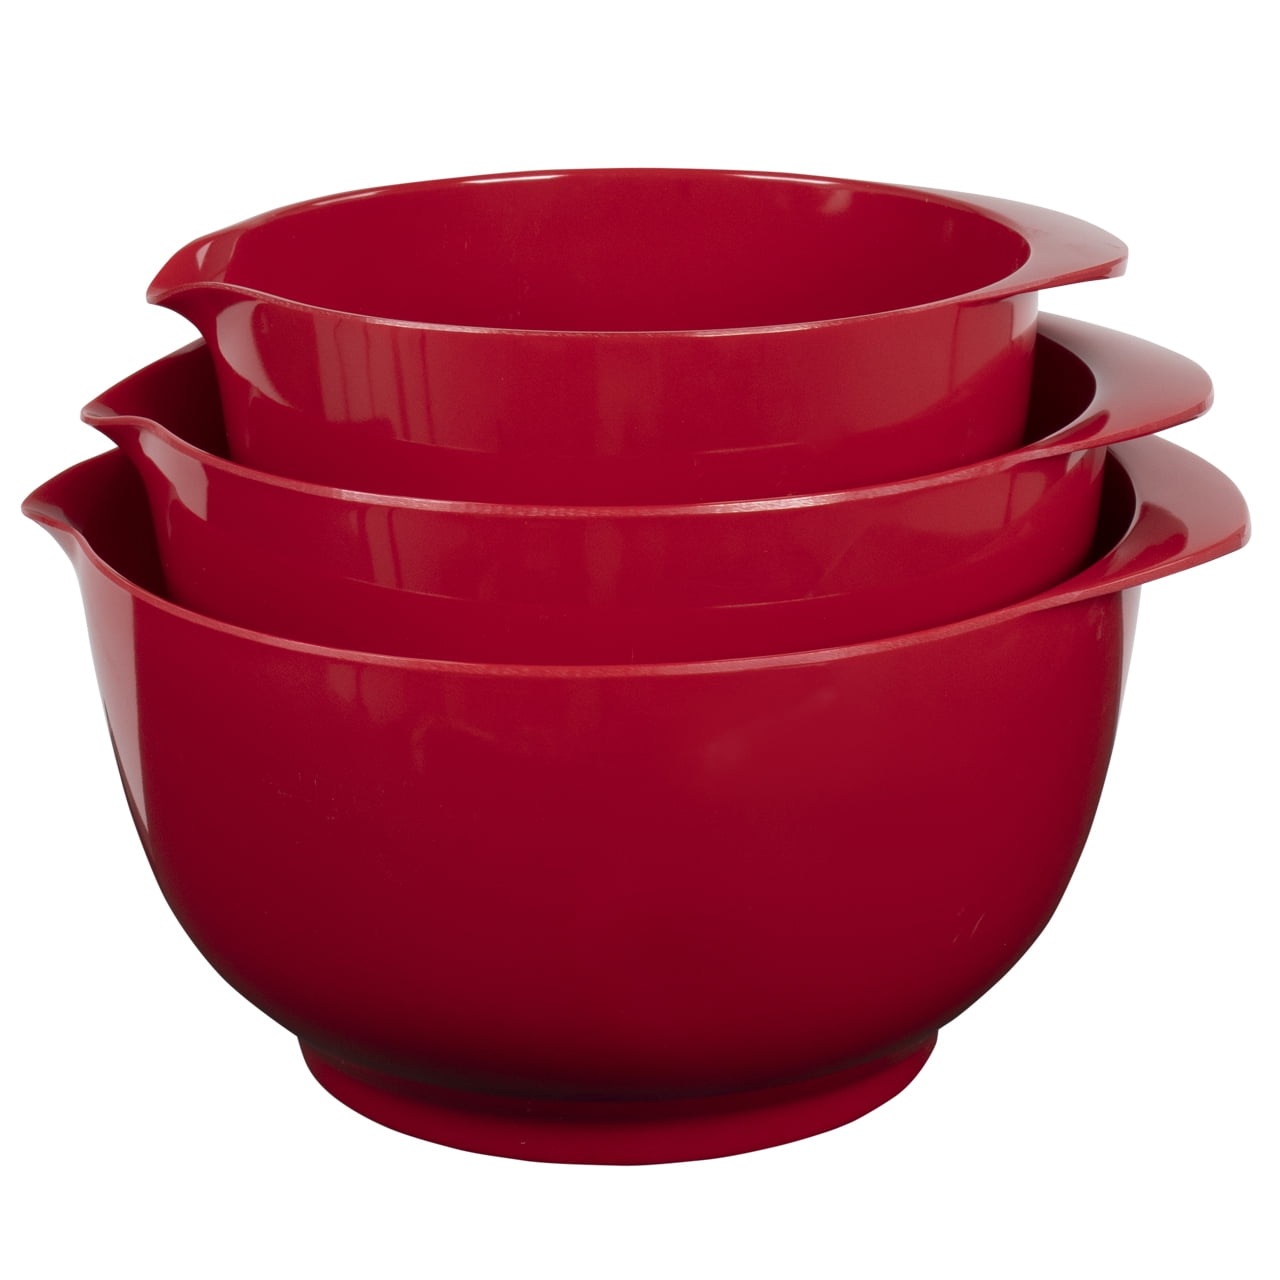 Hutzler Nesting Prep Bowl Set with Lids Red